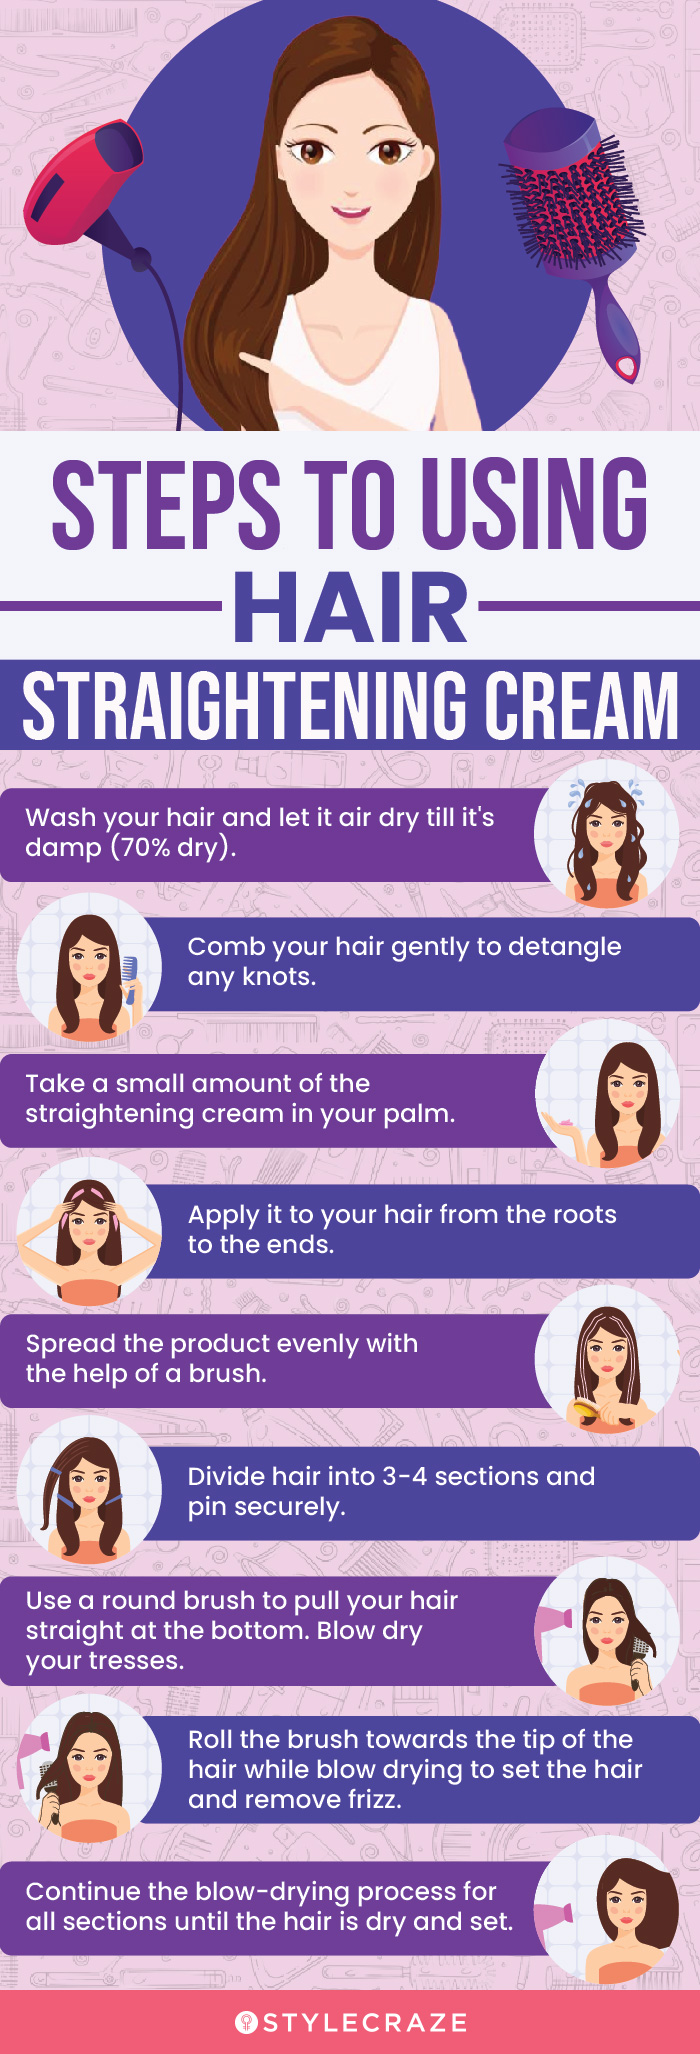 steps to using hair straightening cream (infographic)